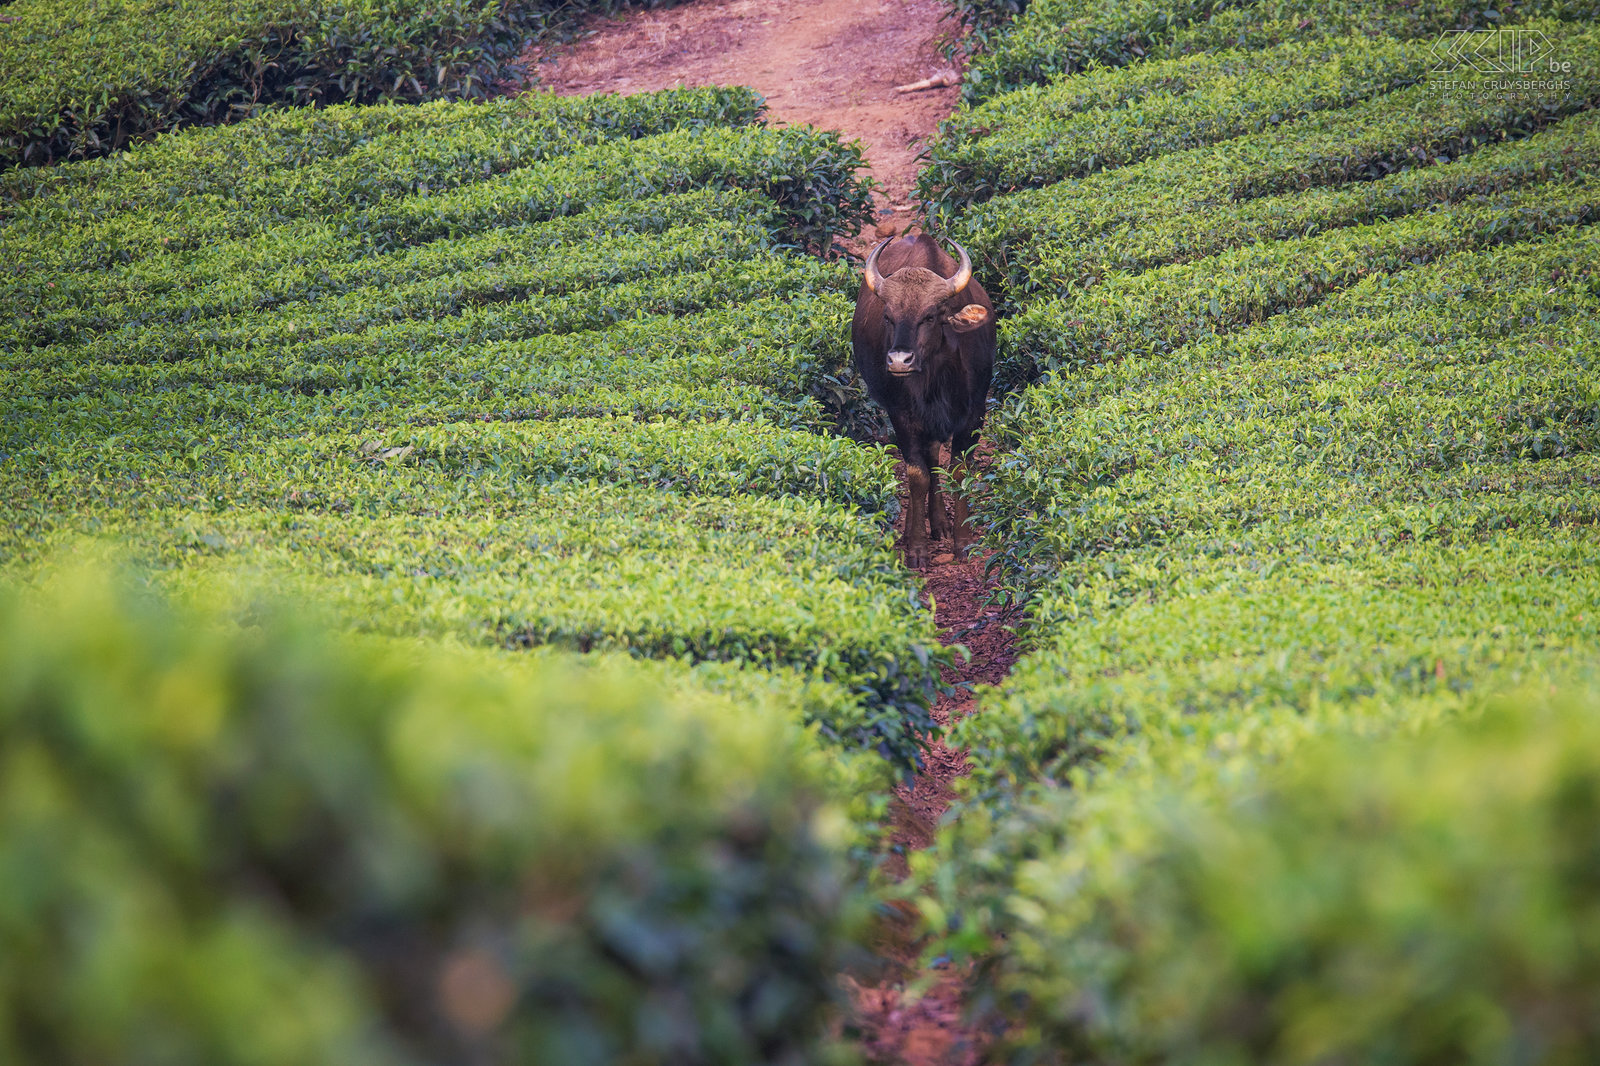 Valparai - Gaur A gaur between the tea fields of Valparai. The gaur, also called Indian bison (Bos gaurus), is the largest (wild) bovine living in Asia.  Stefan Cruysberghs